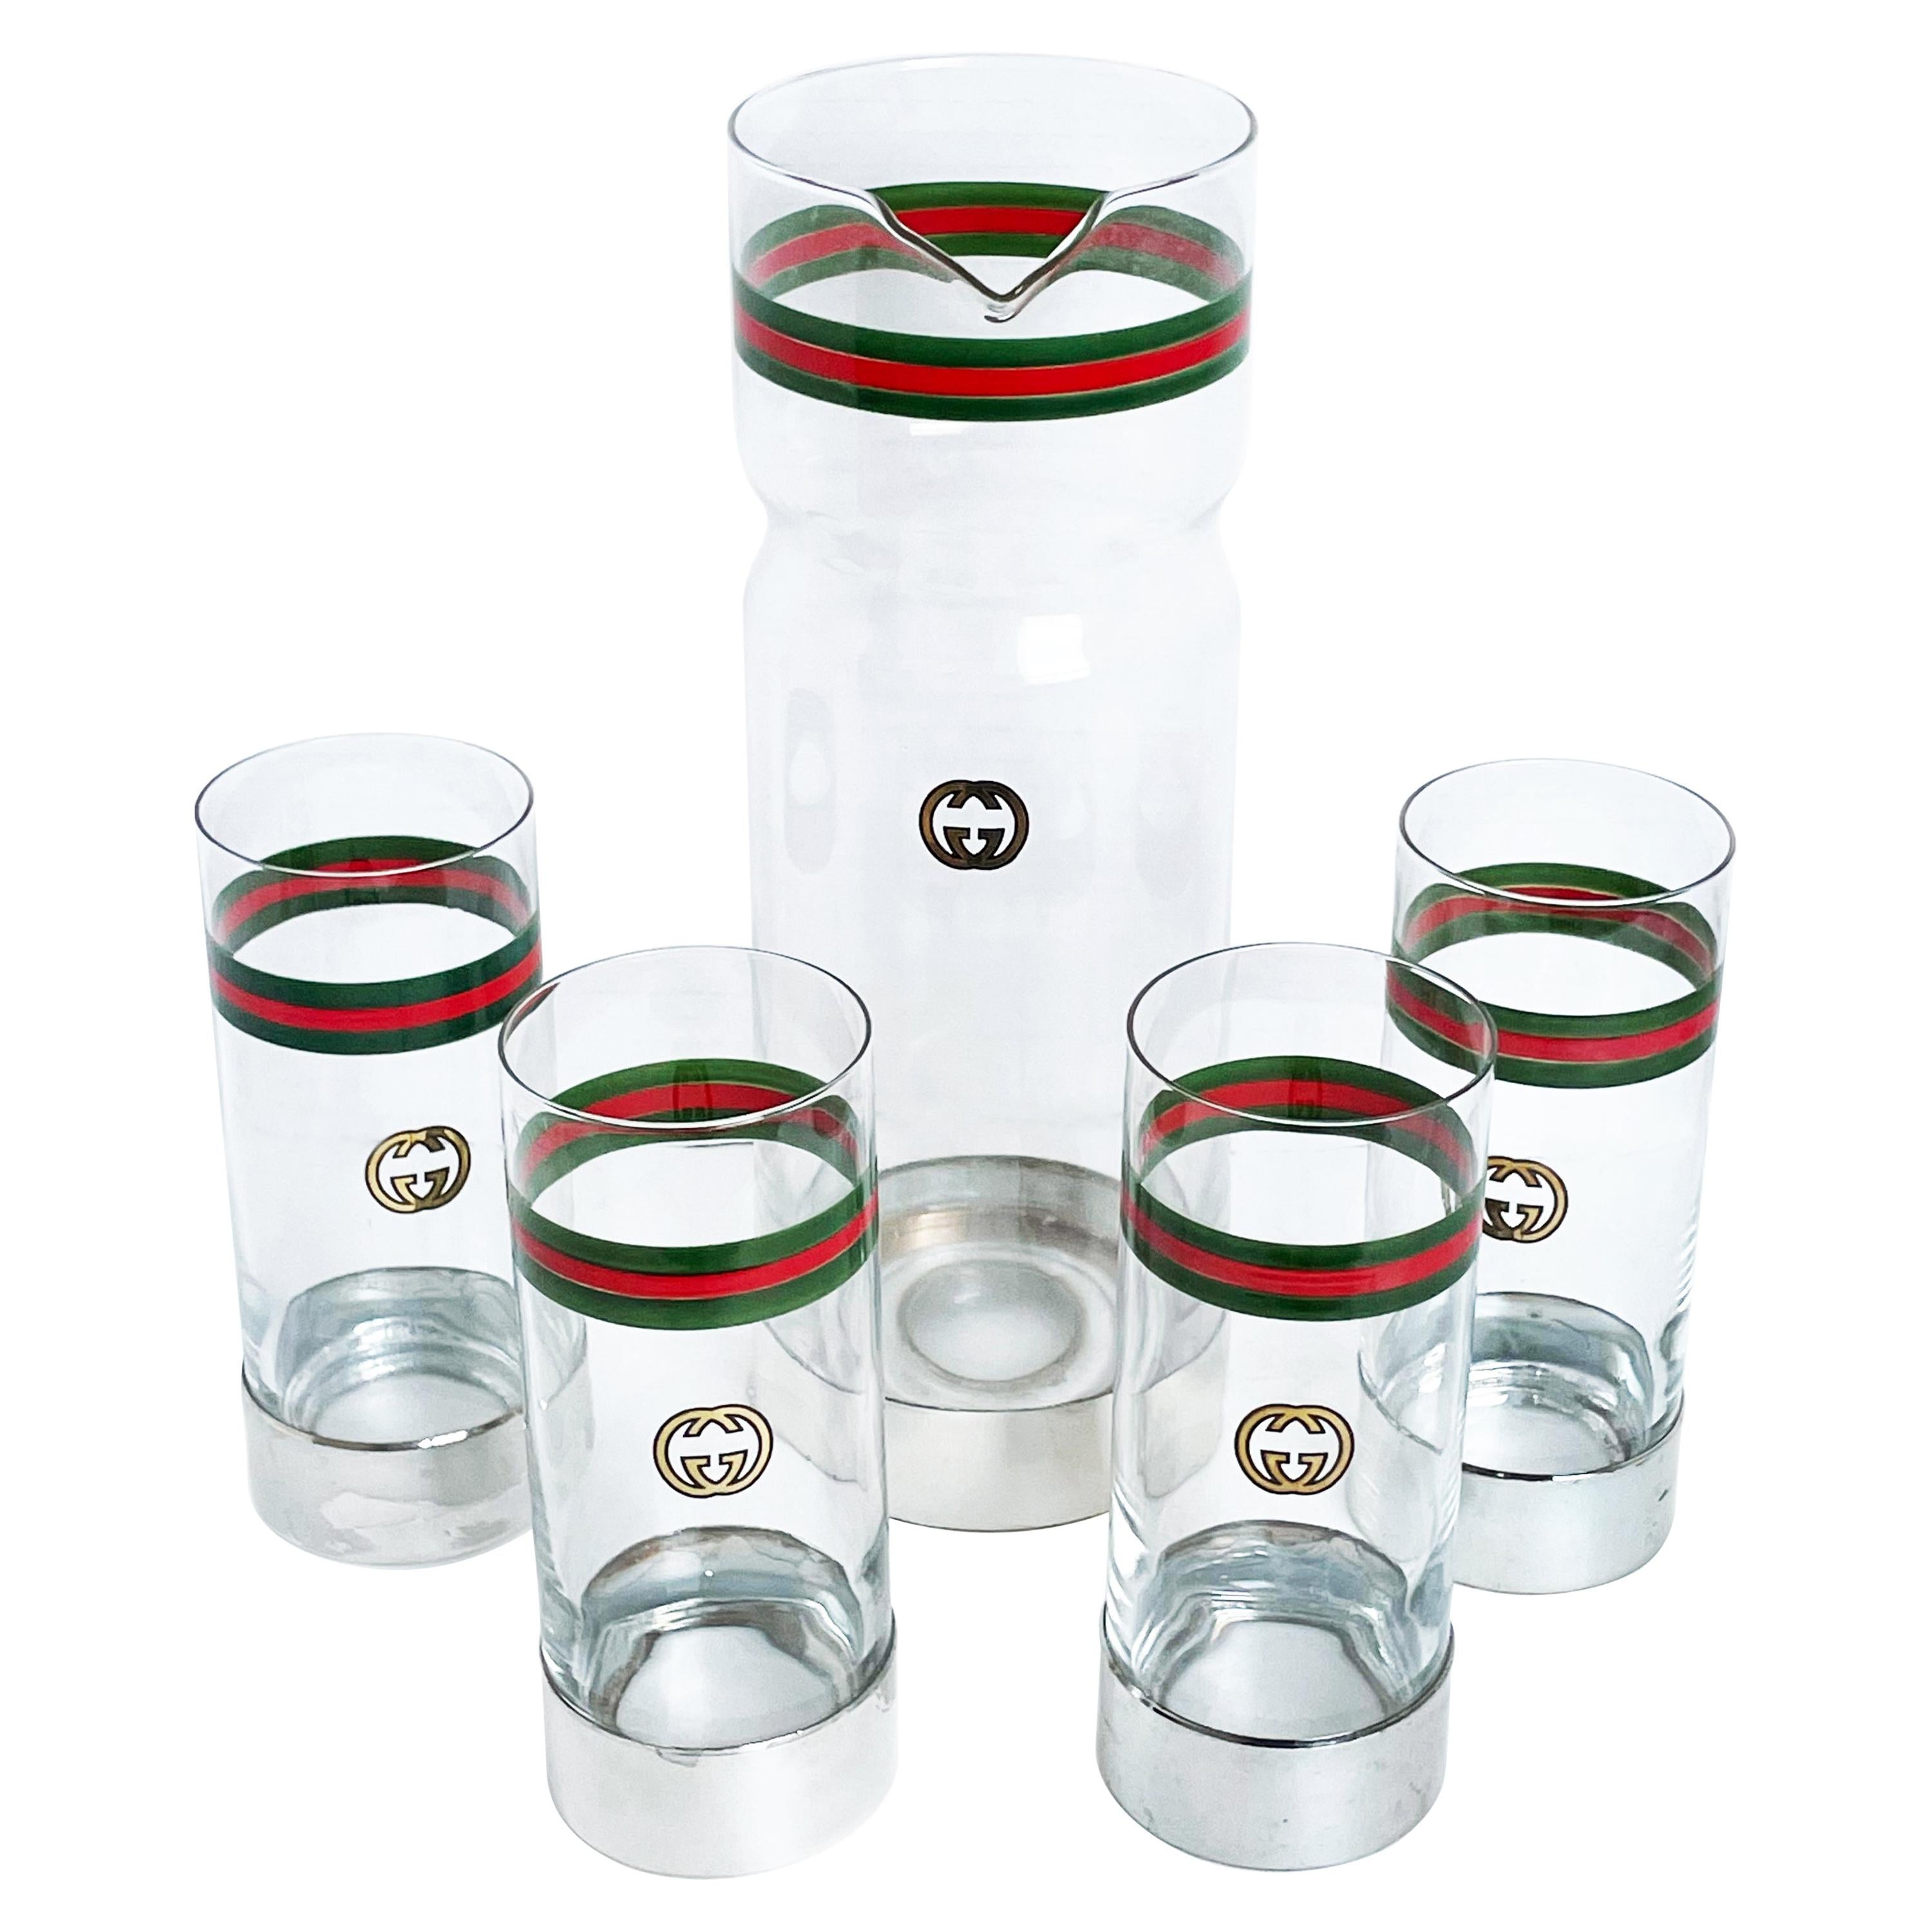 Vintage Gucci Barware Set 5pc Pitcher Carafe & High Ball Glasses GG Logo Webbing